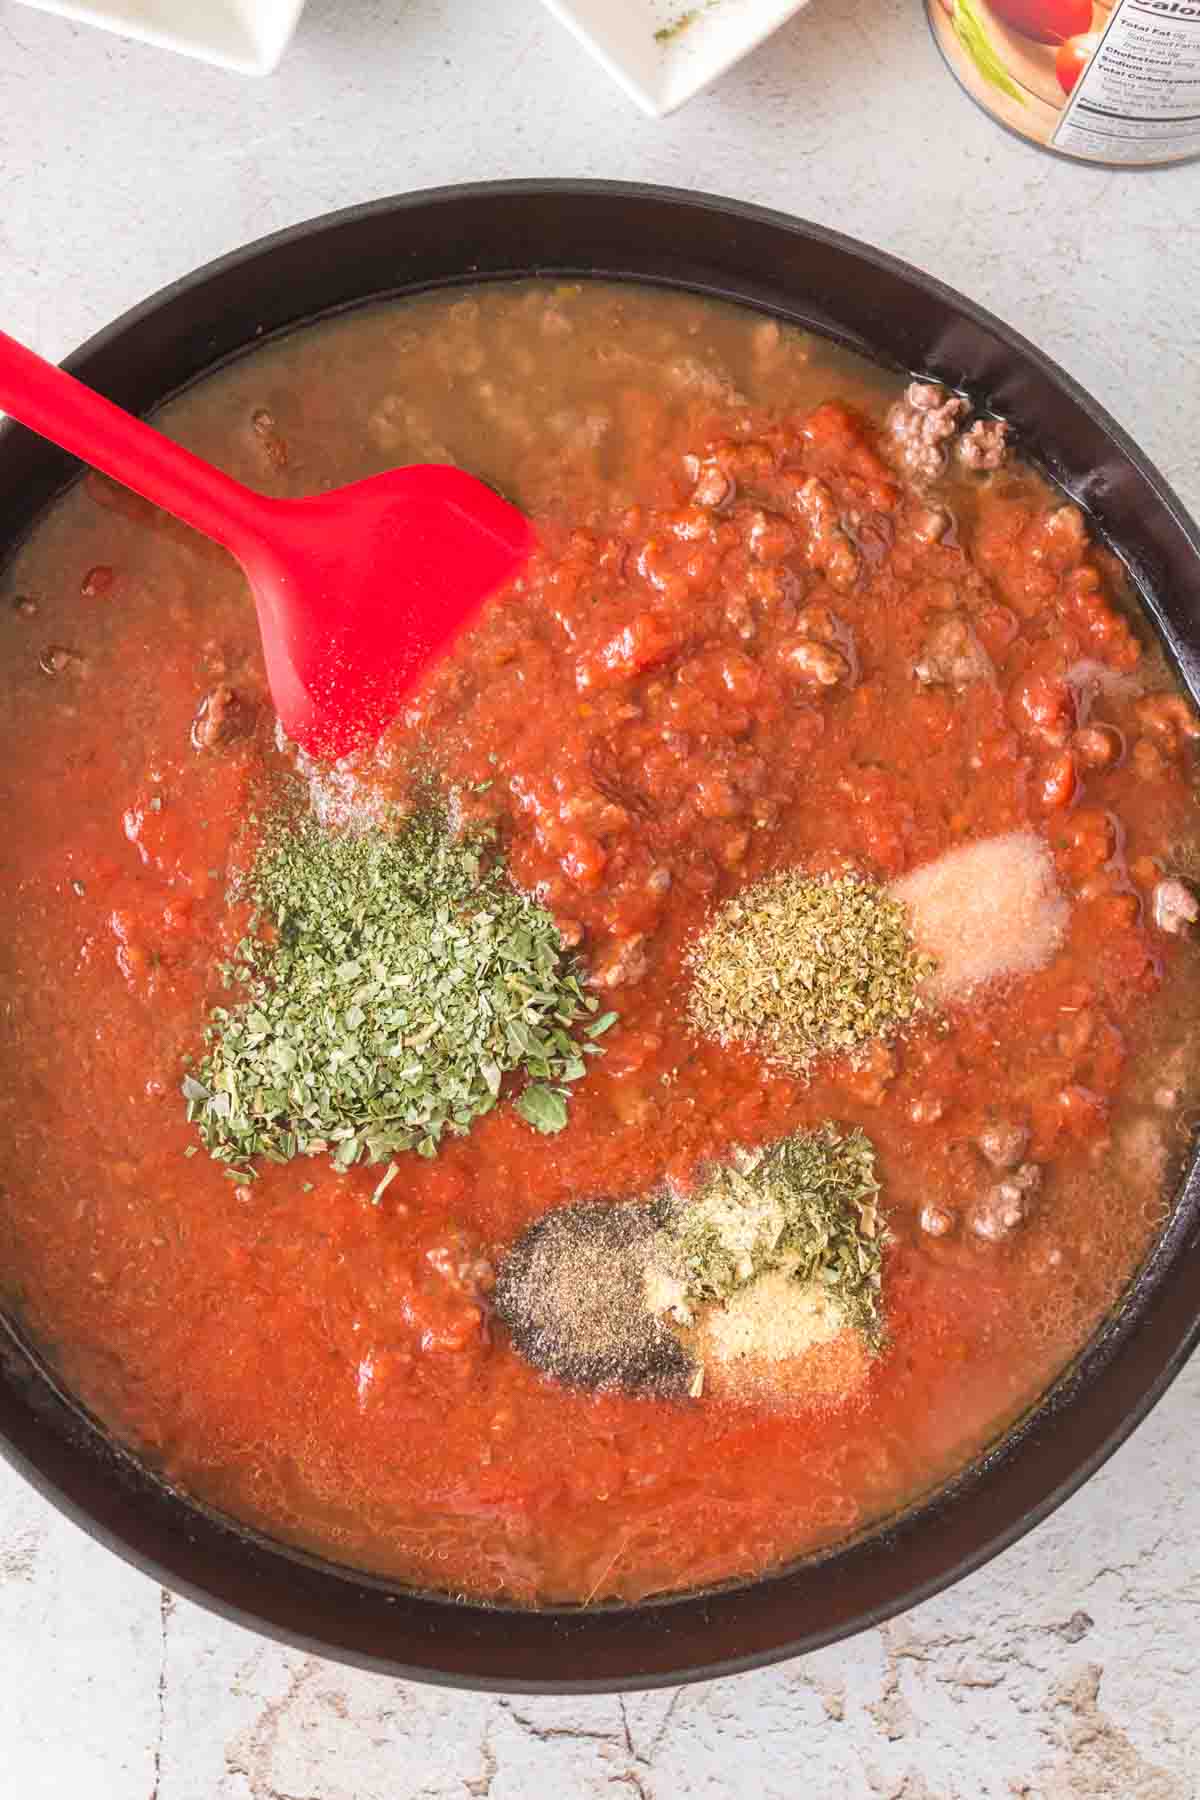 easy homemade spaghetti sauce in the pan